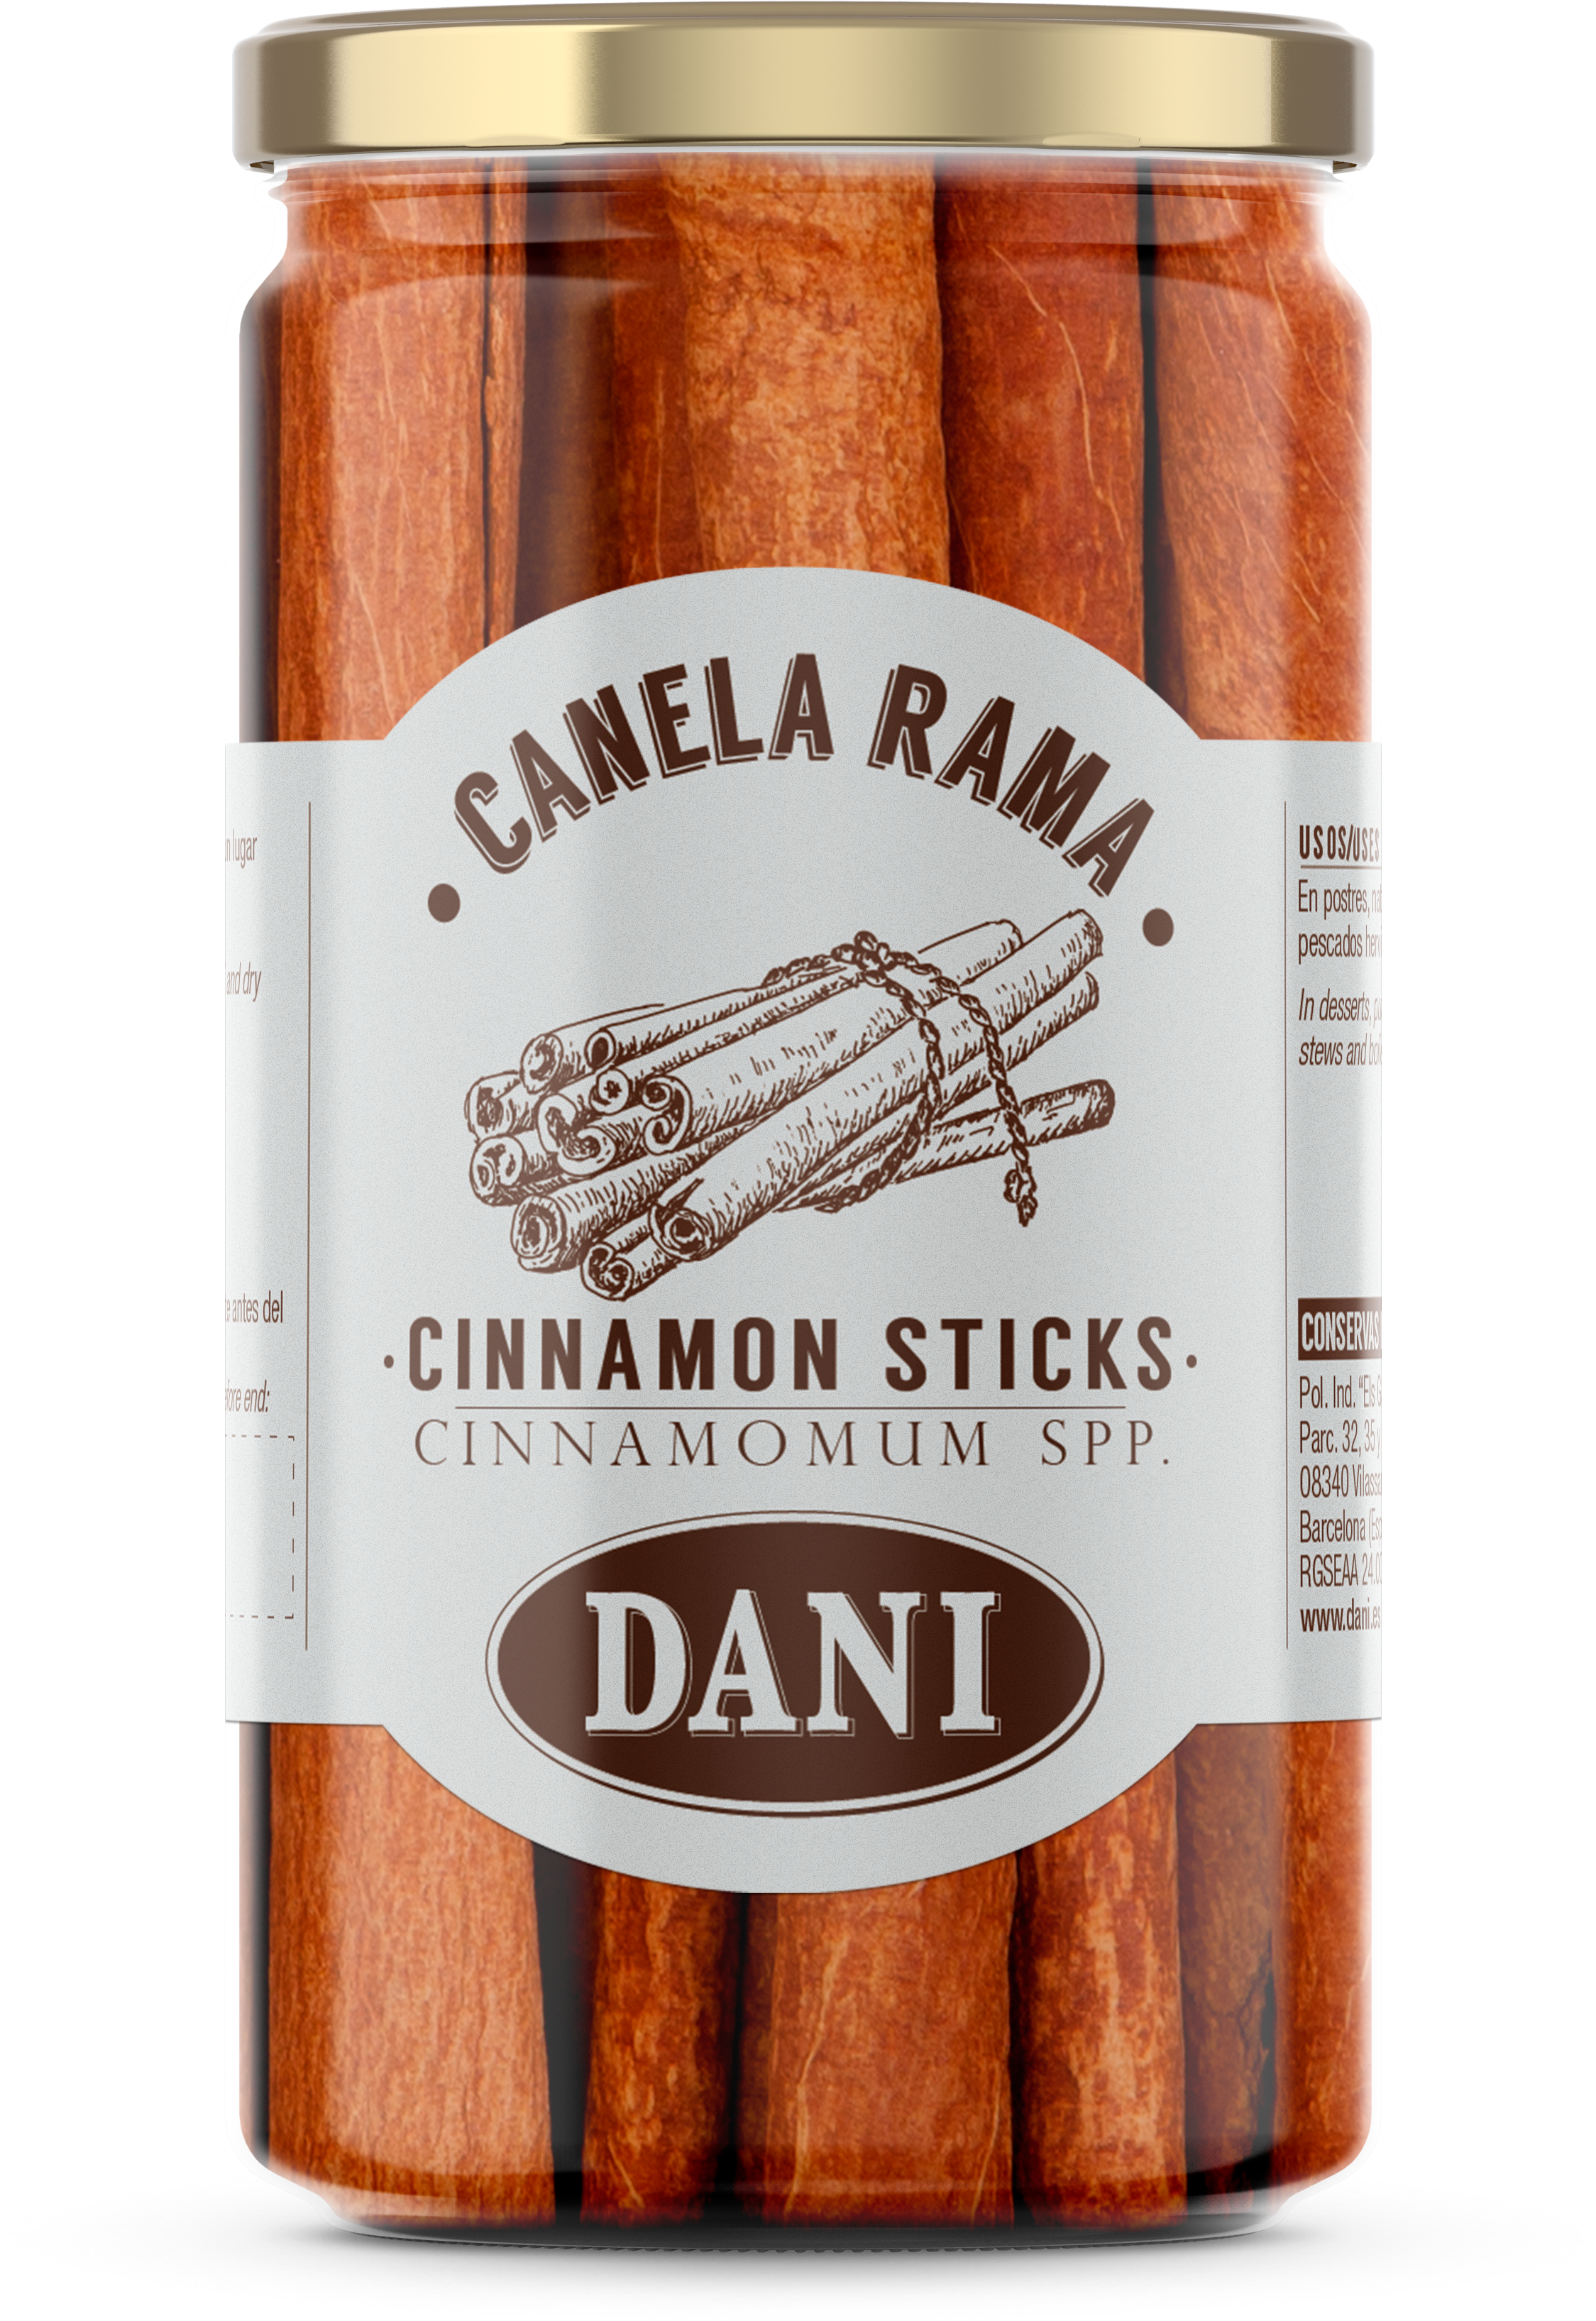 A Can Of Cinnamon Sticks